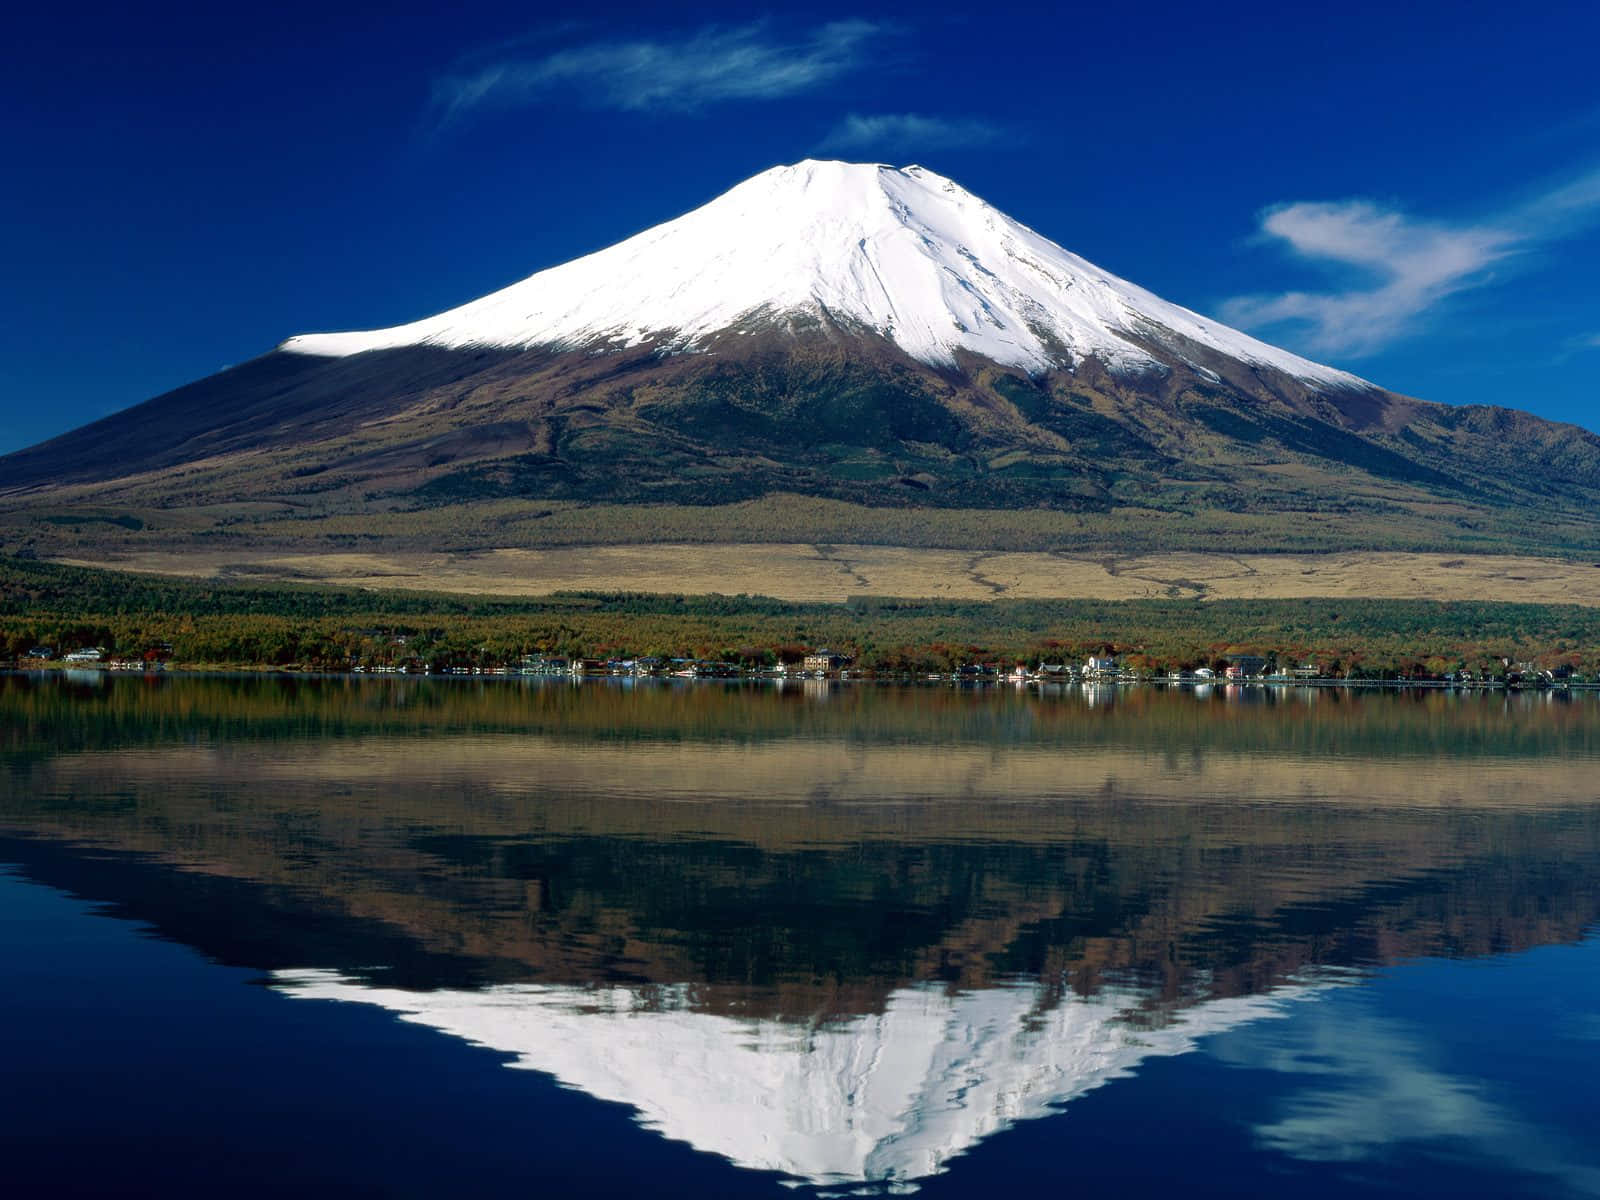 Get lost in a beautiful skyline of majestic Mt. Fuji